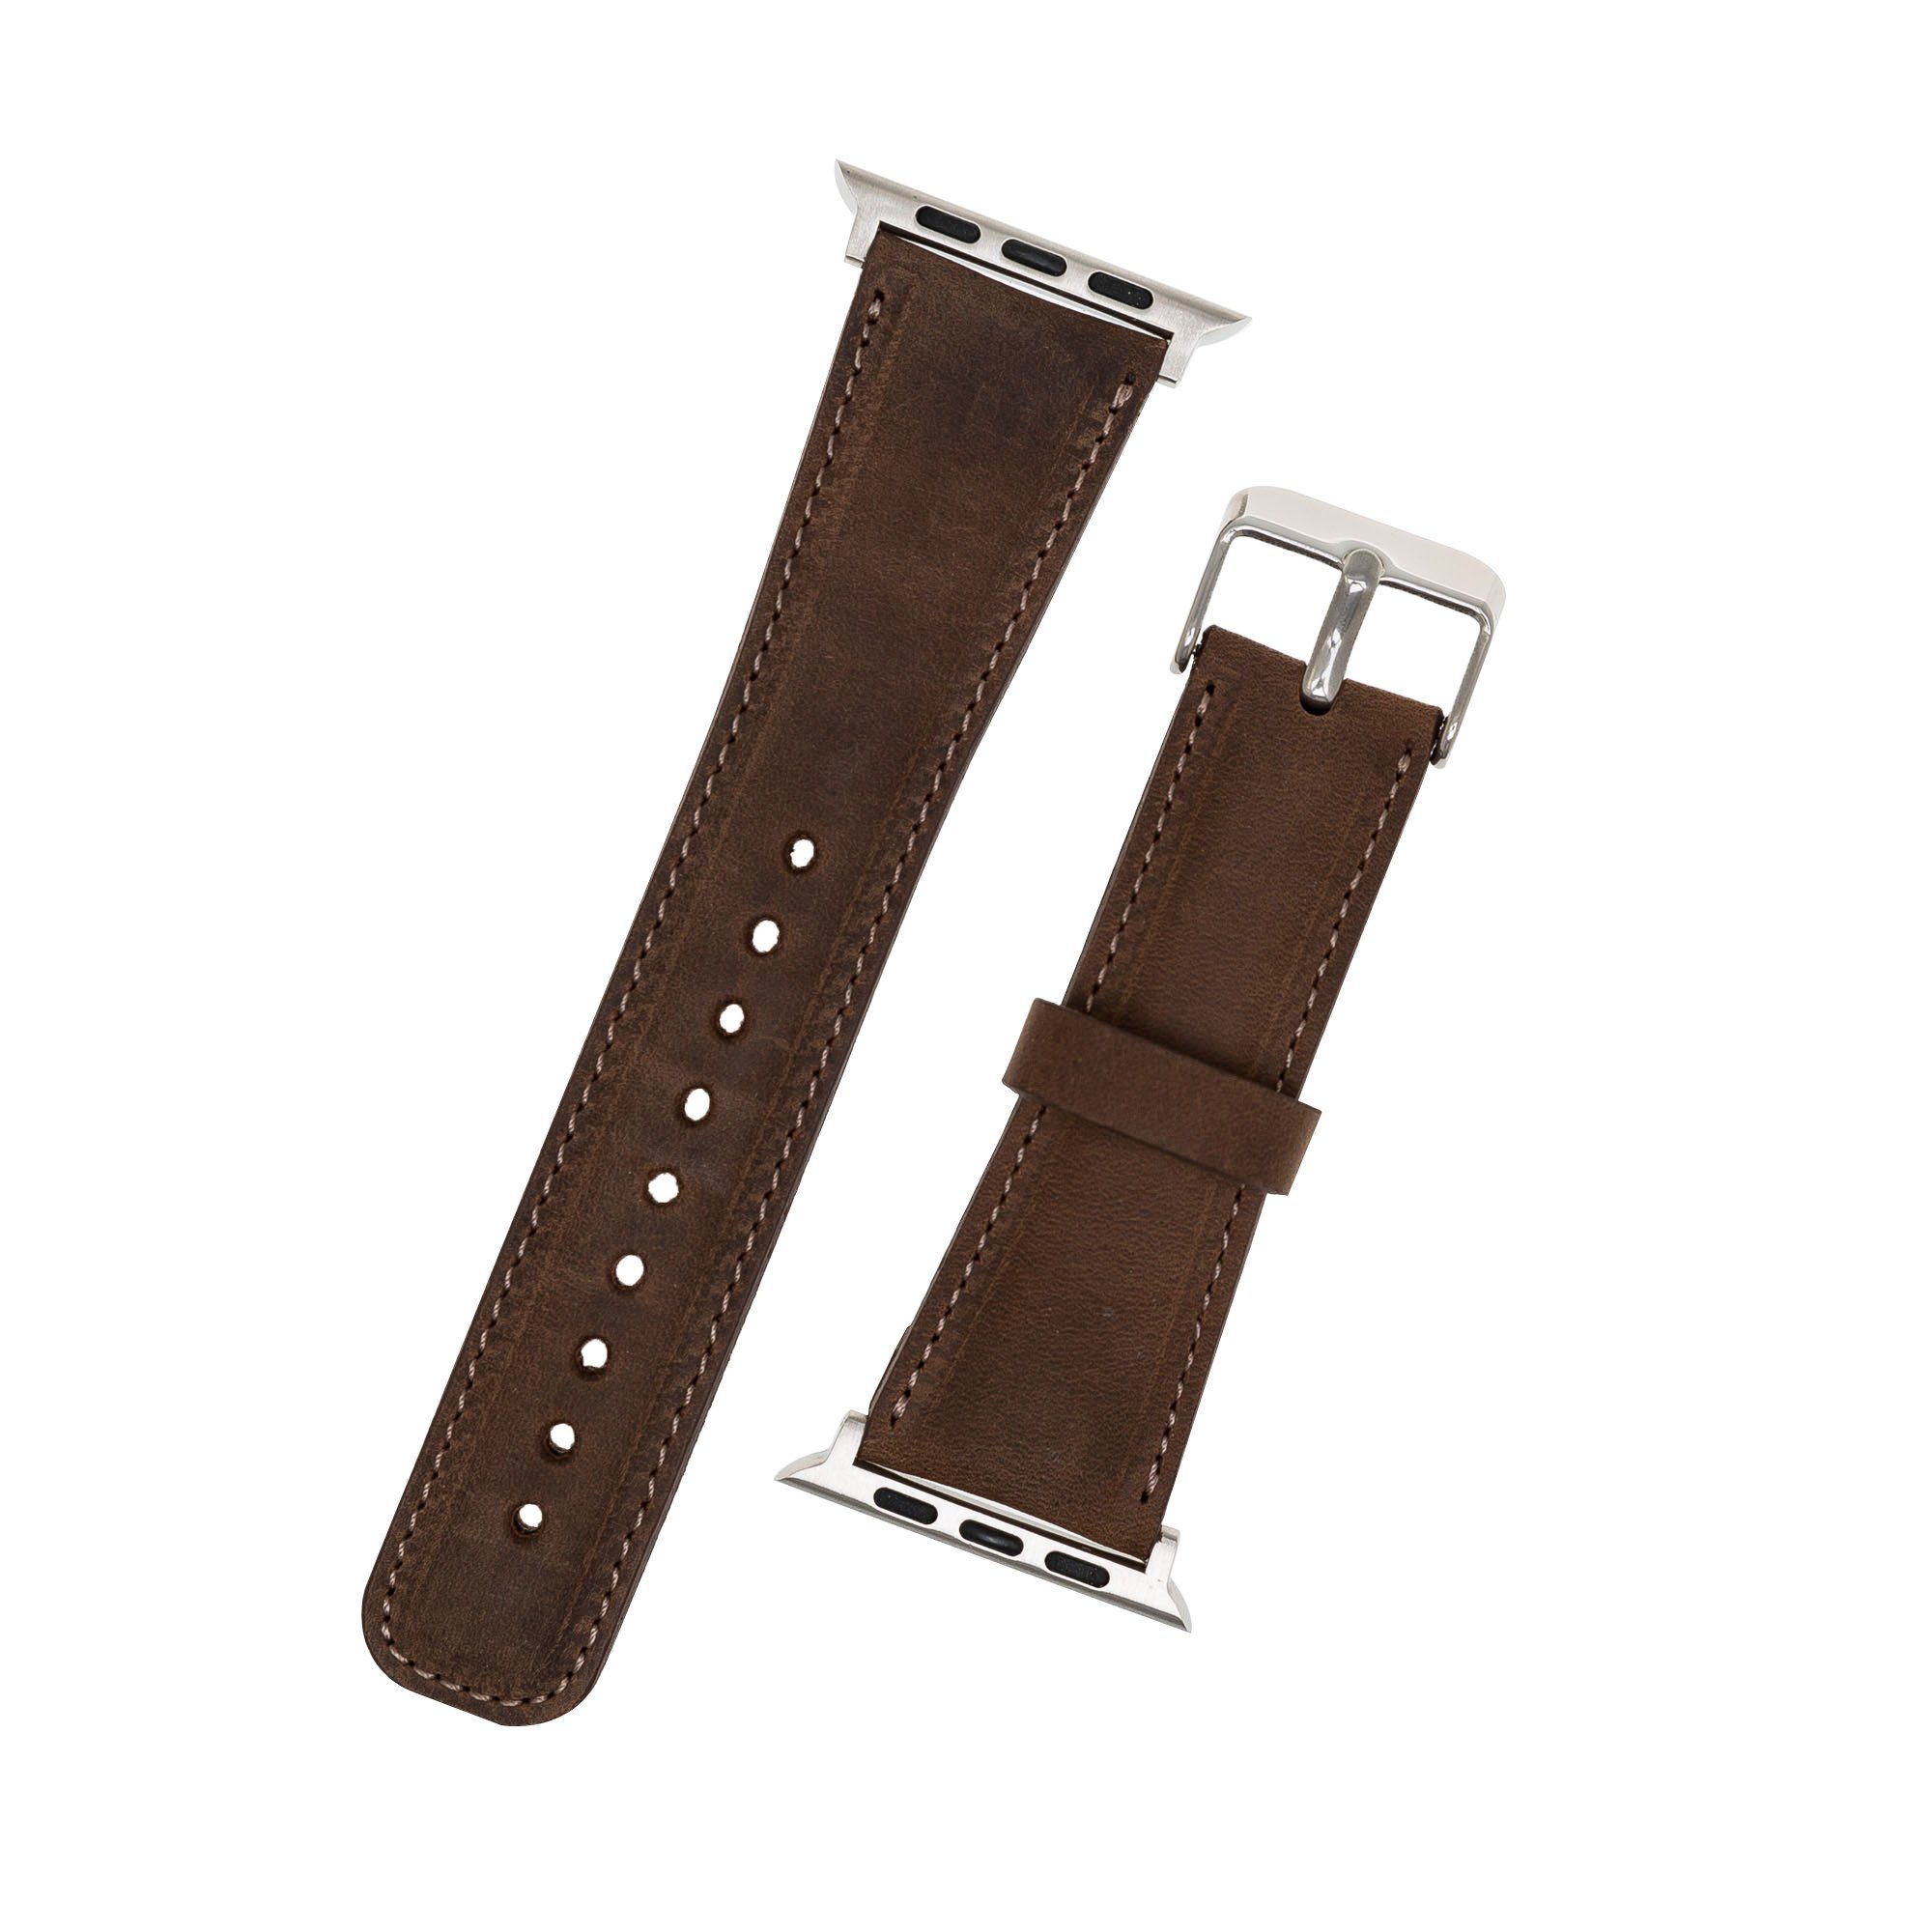 Apple Ersatzarmband Band Braun Ultra/9/8/7SE/6-1 Leather Renna Matt Watch Echtleder Uhrenarmband für Series